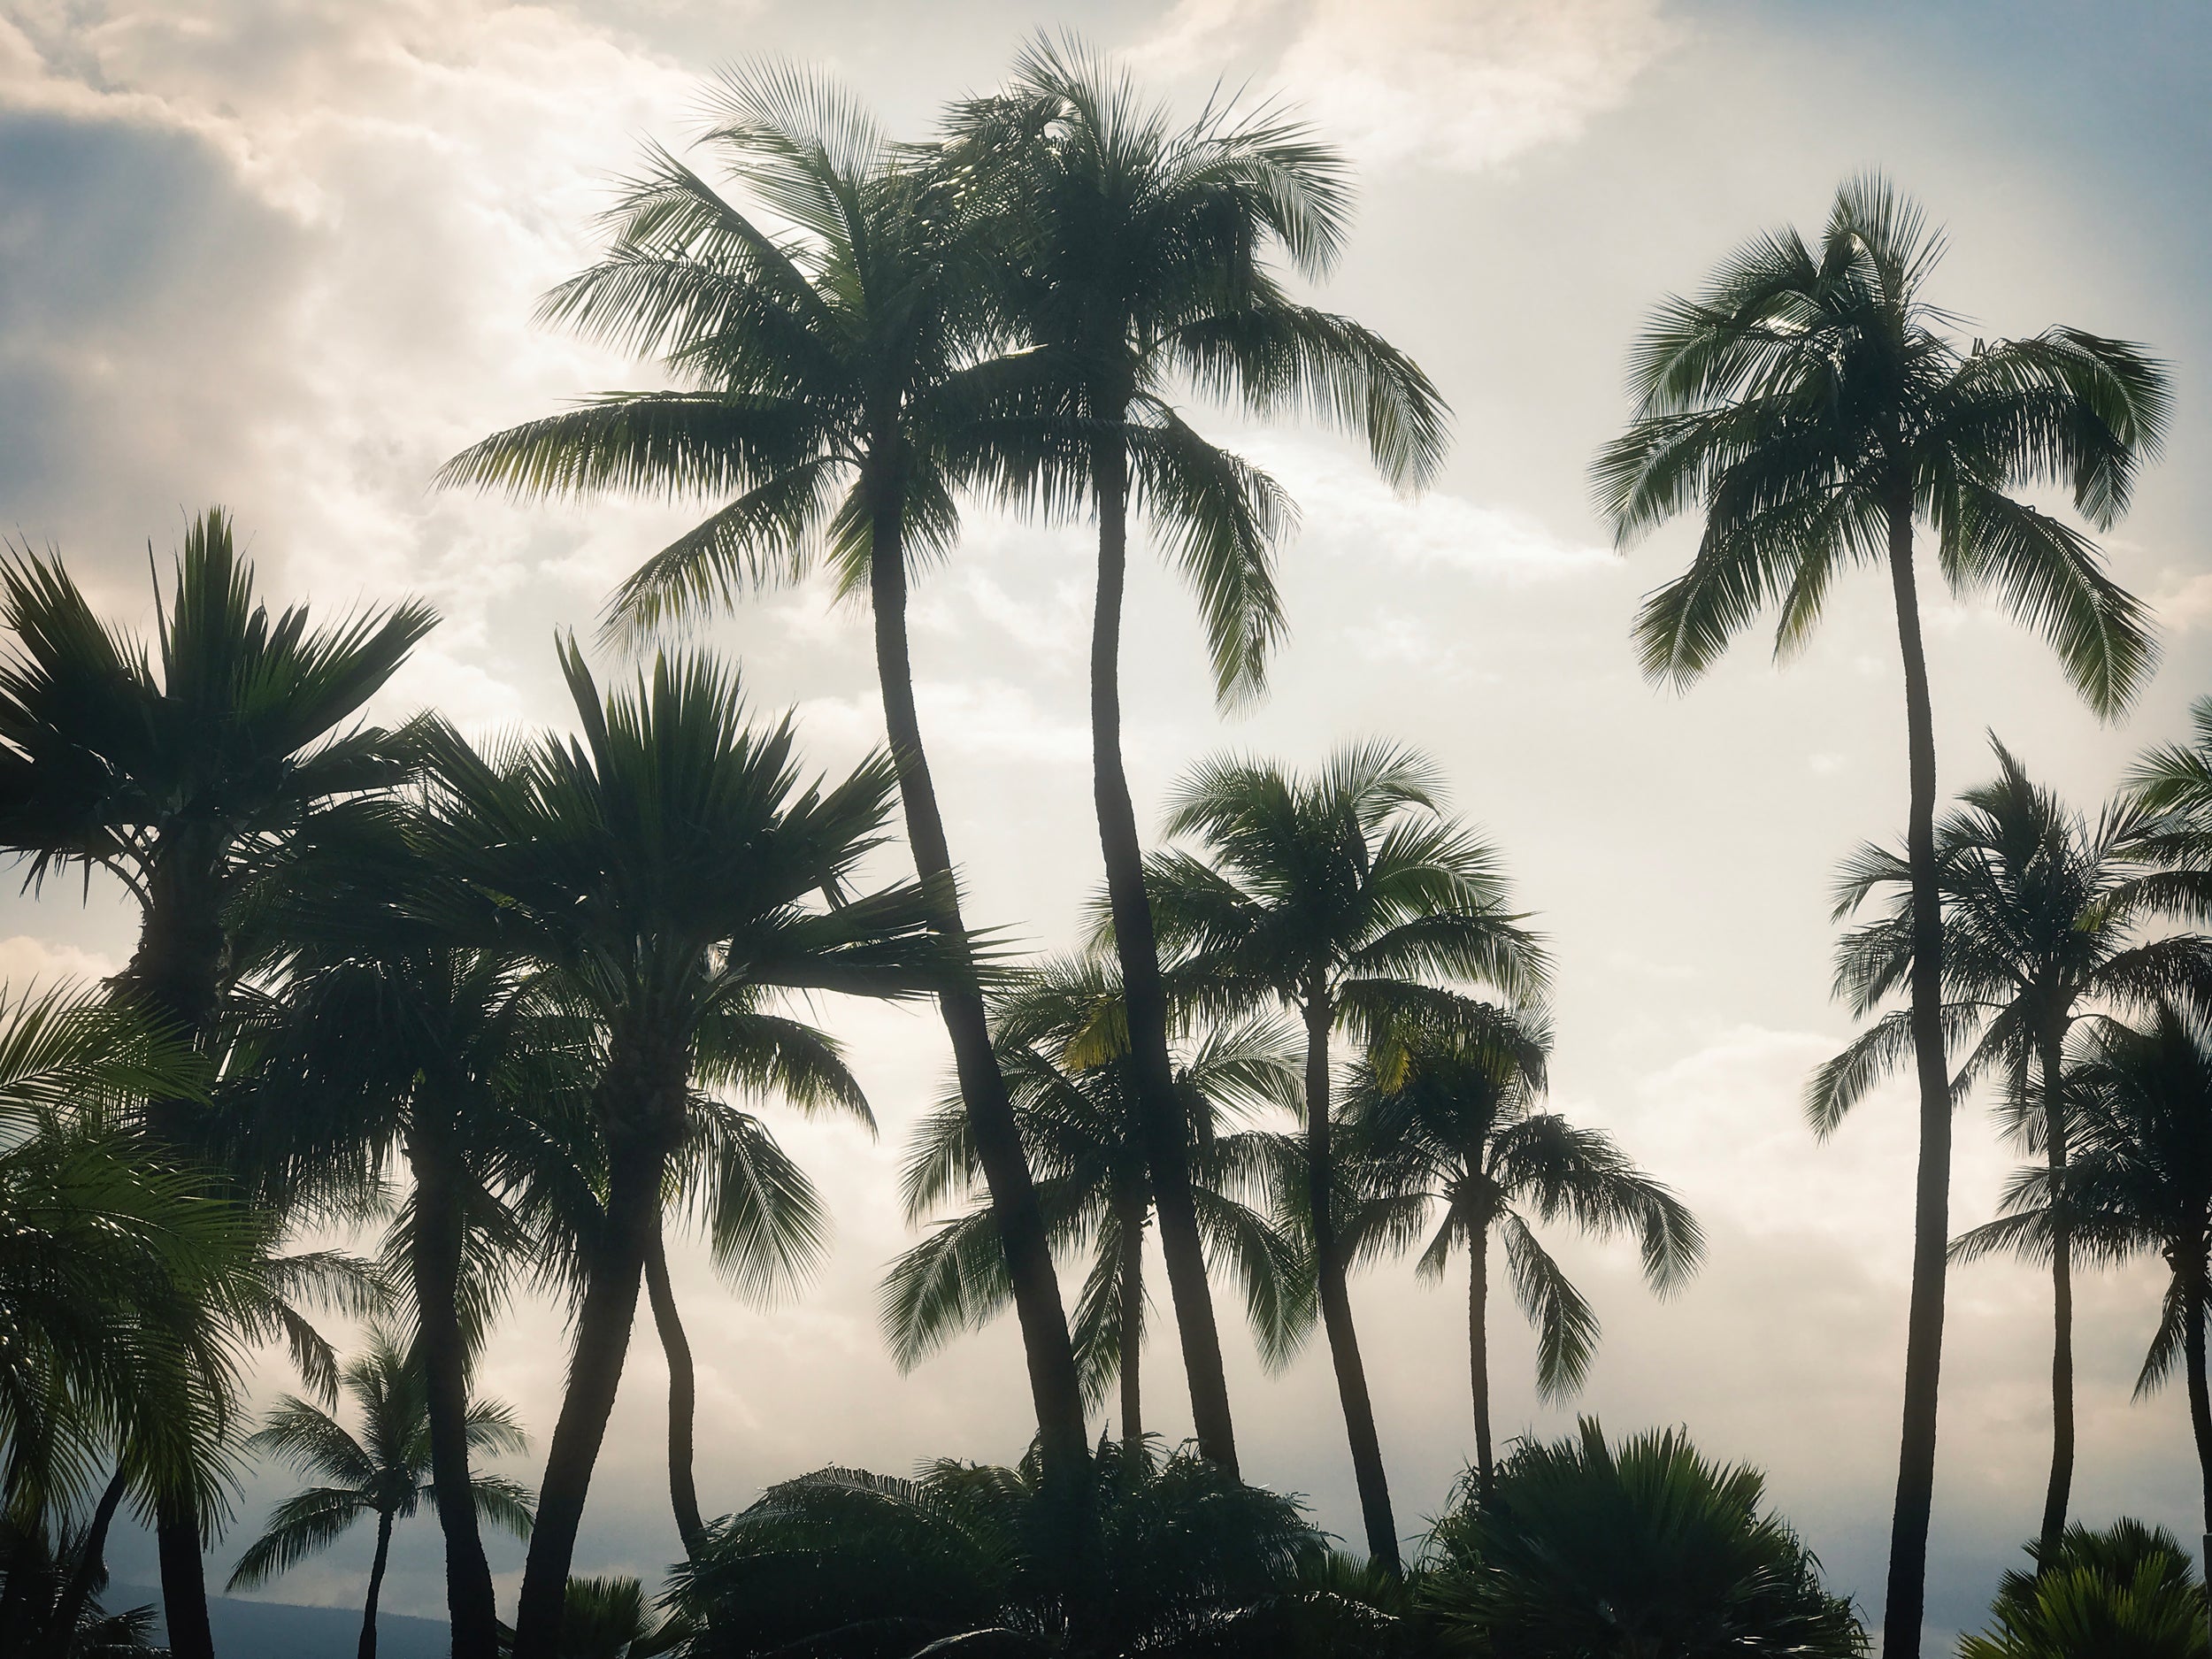 Maui Palms 2.0, Limited Edition Print